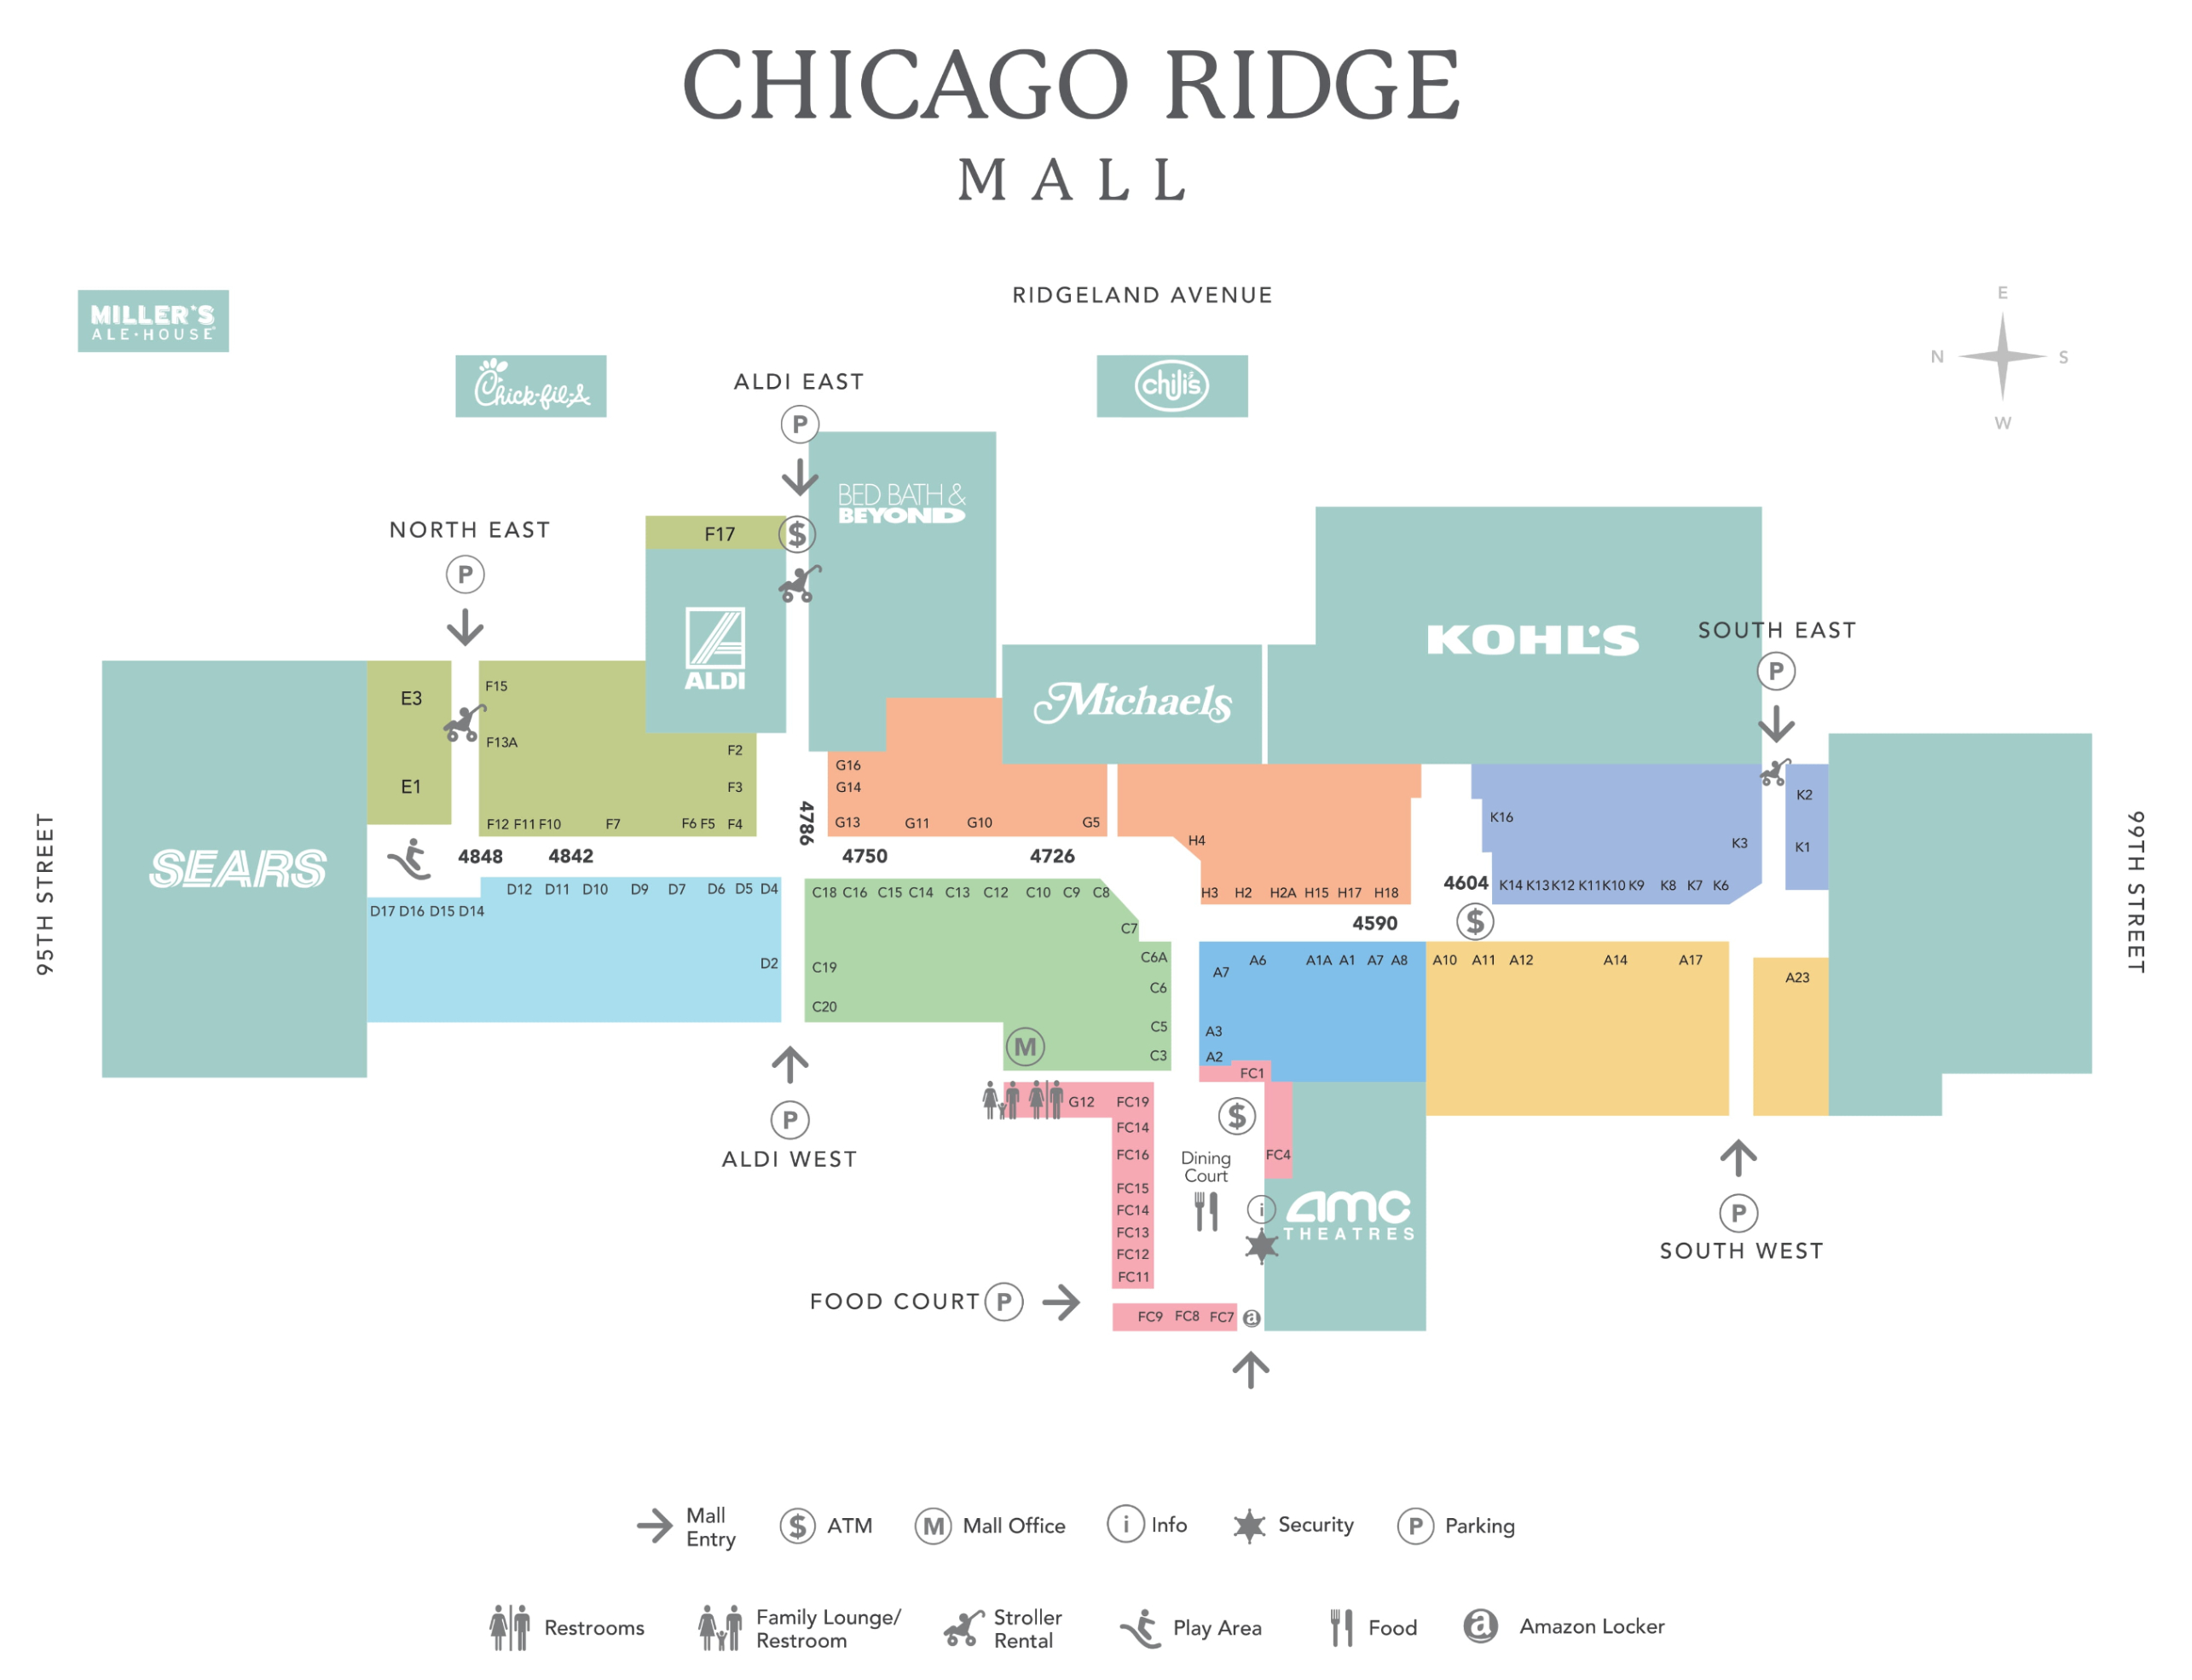 Chicago Ridge Mall (118 stores) shopping in Chicago Ridge, Illinois